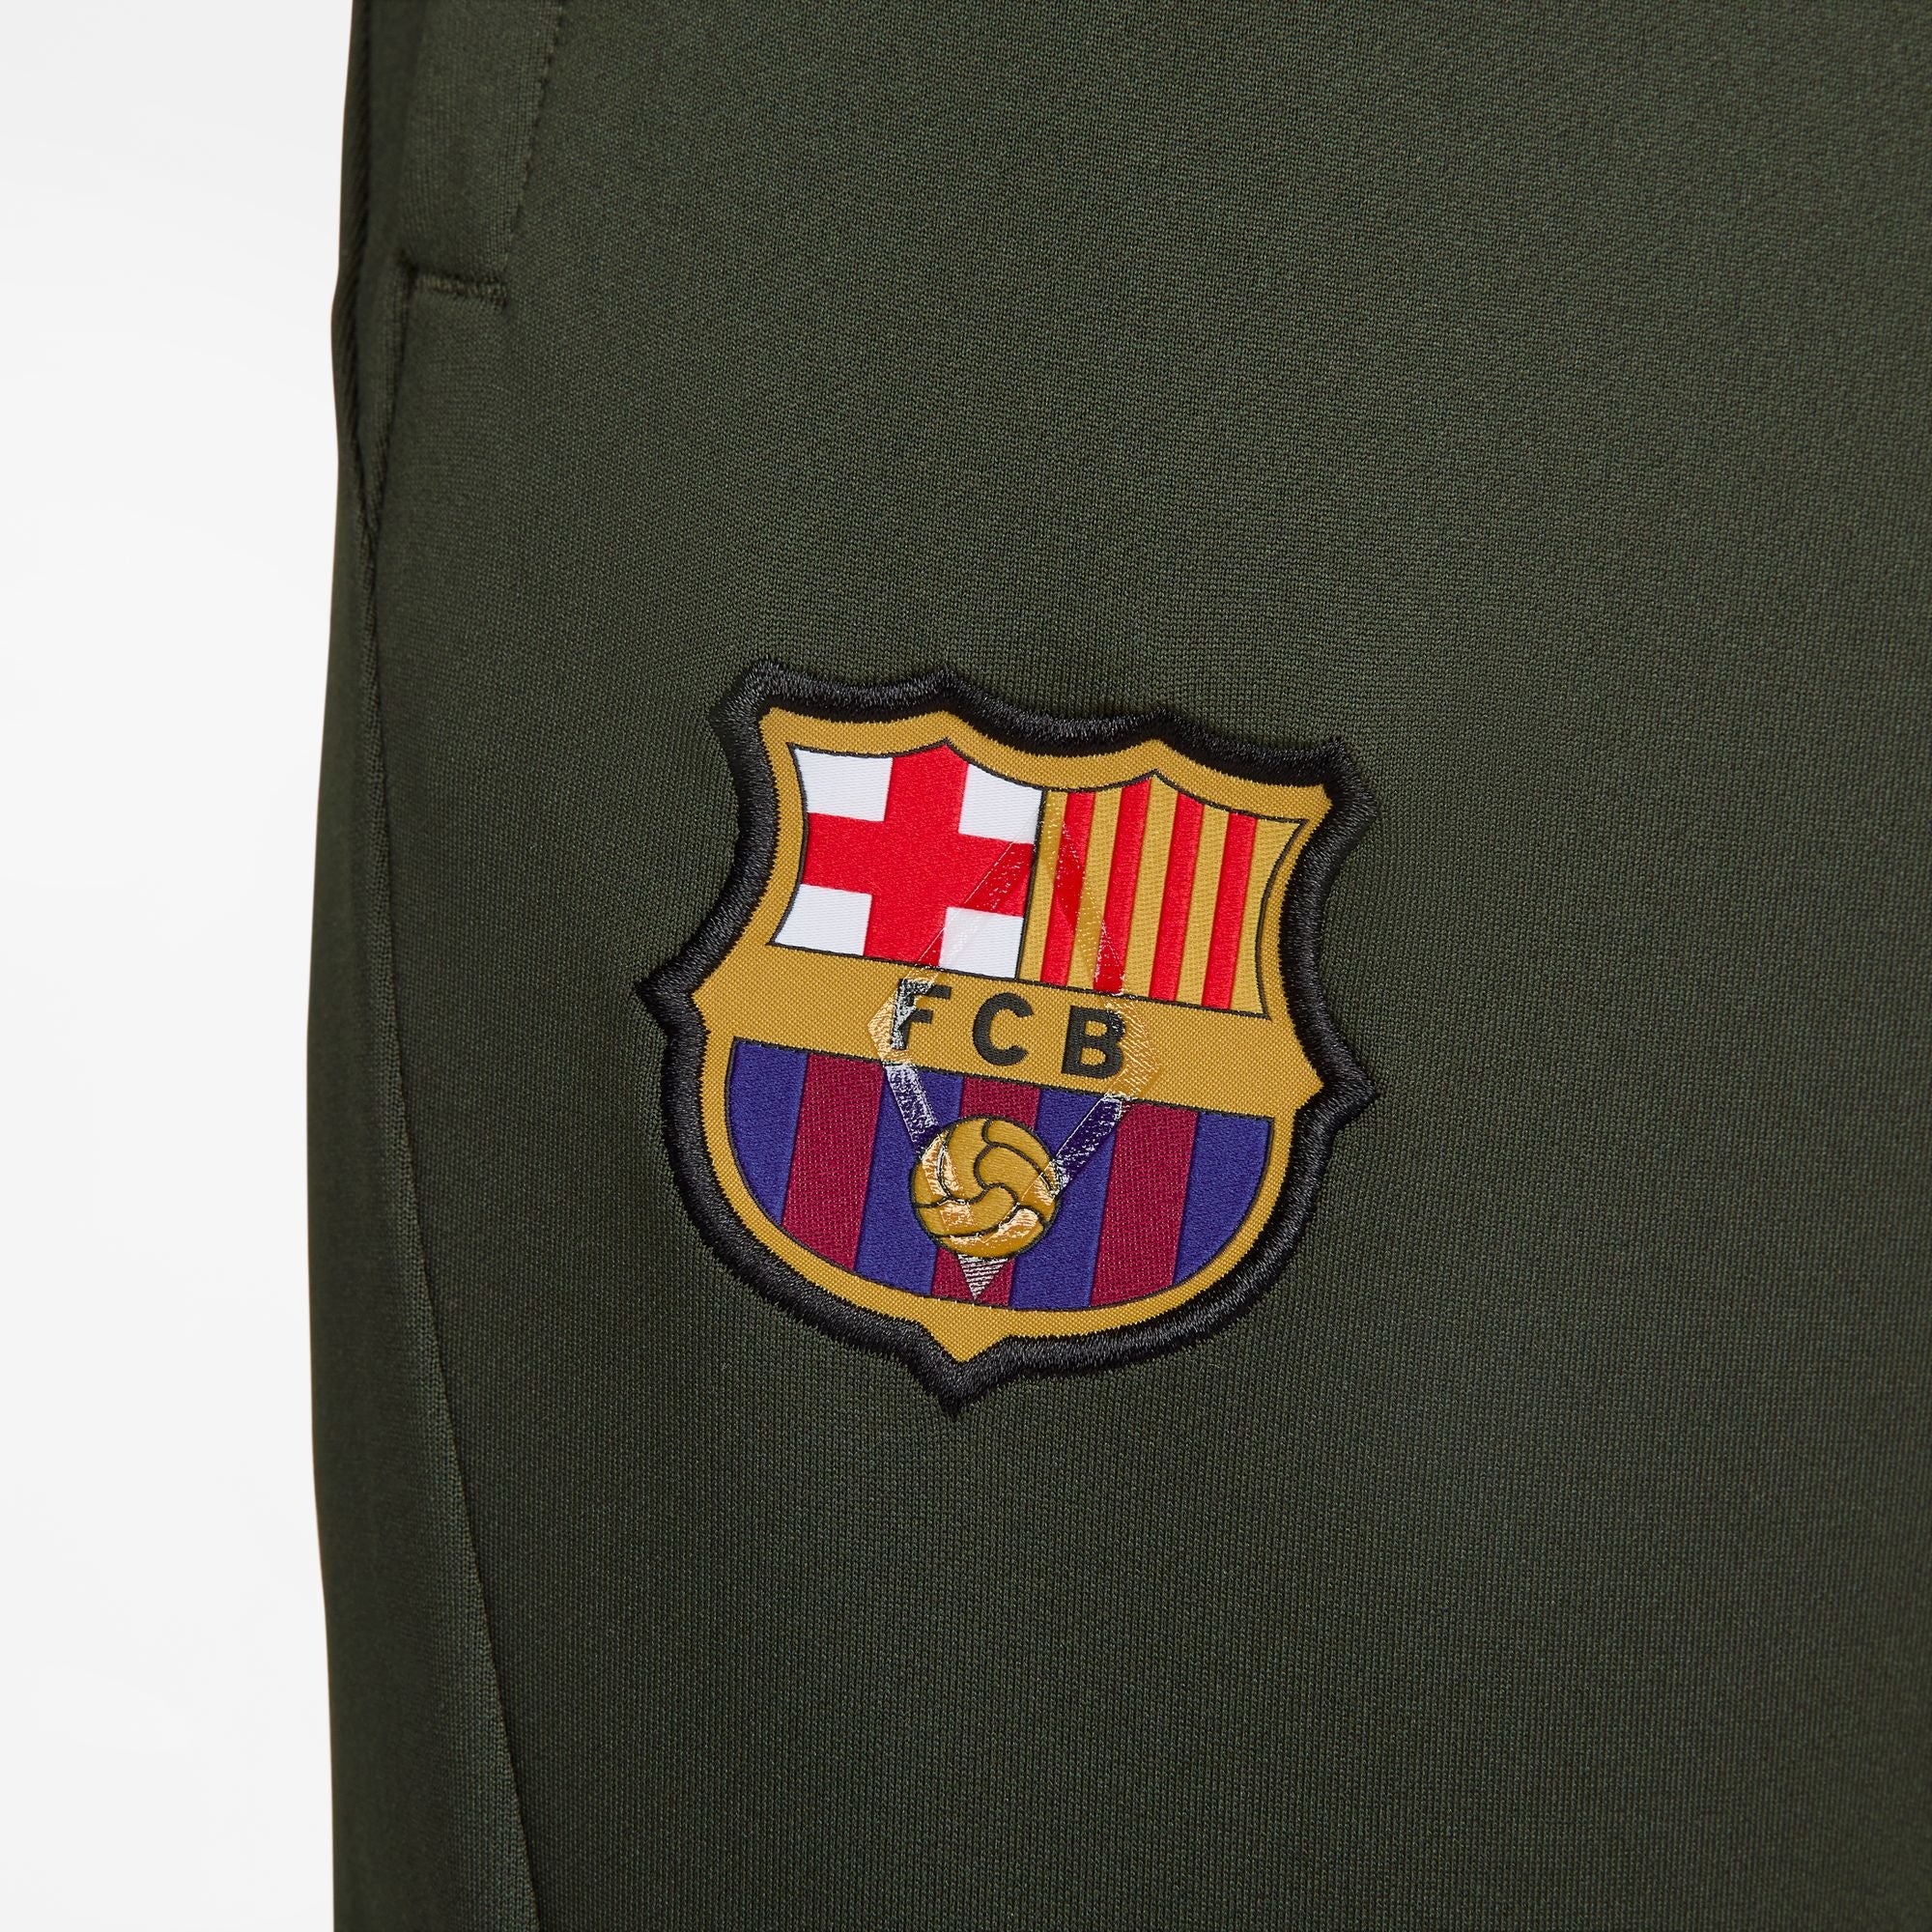 FC Barcelona Strike Men's Nike Dri-FIT Soccer Pants.